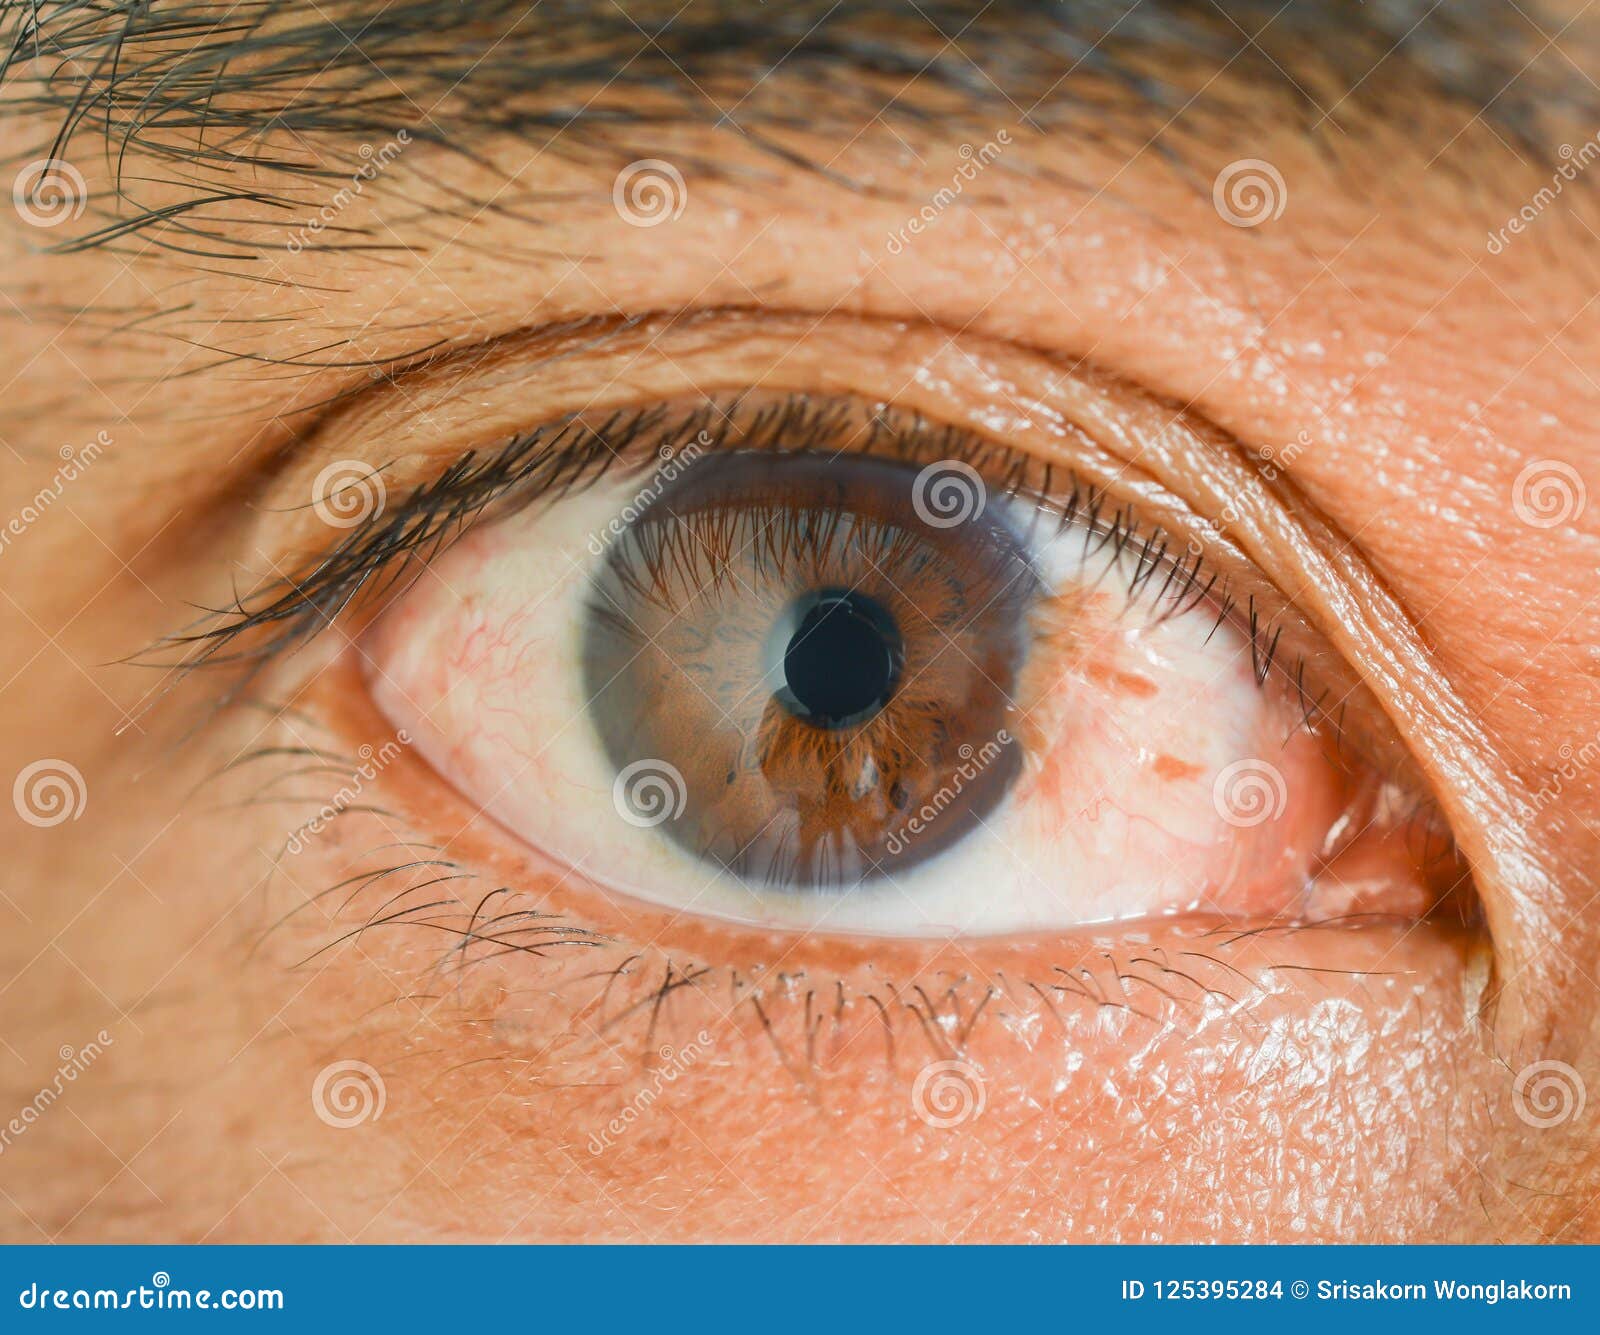 eye pterygium in man